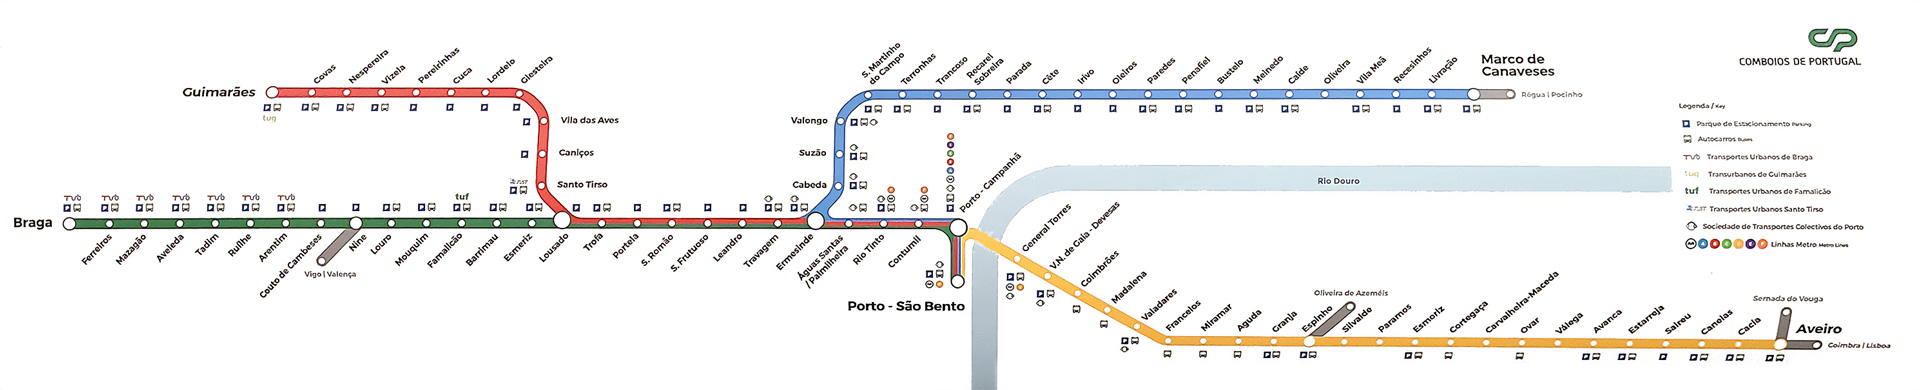 Porto Portugal comboios de portugal train stops map